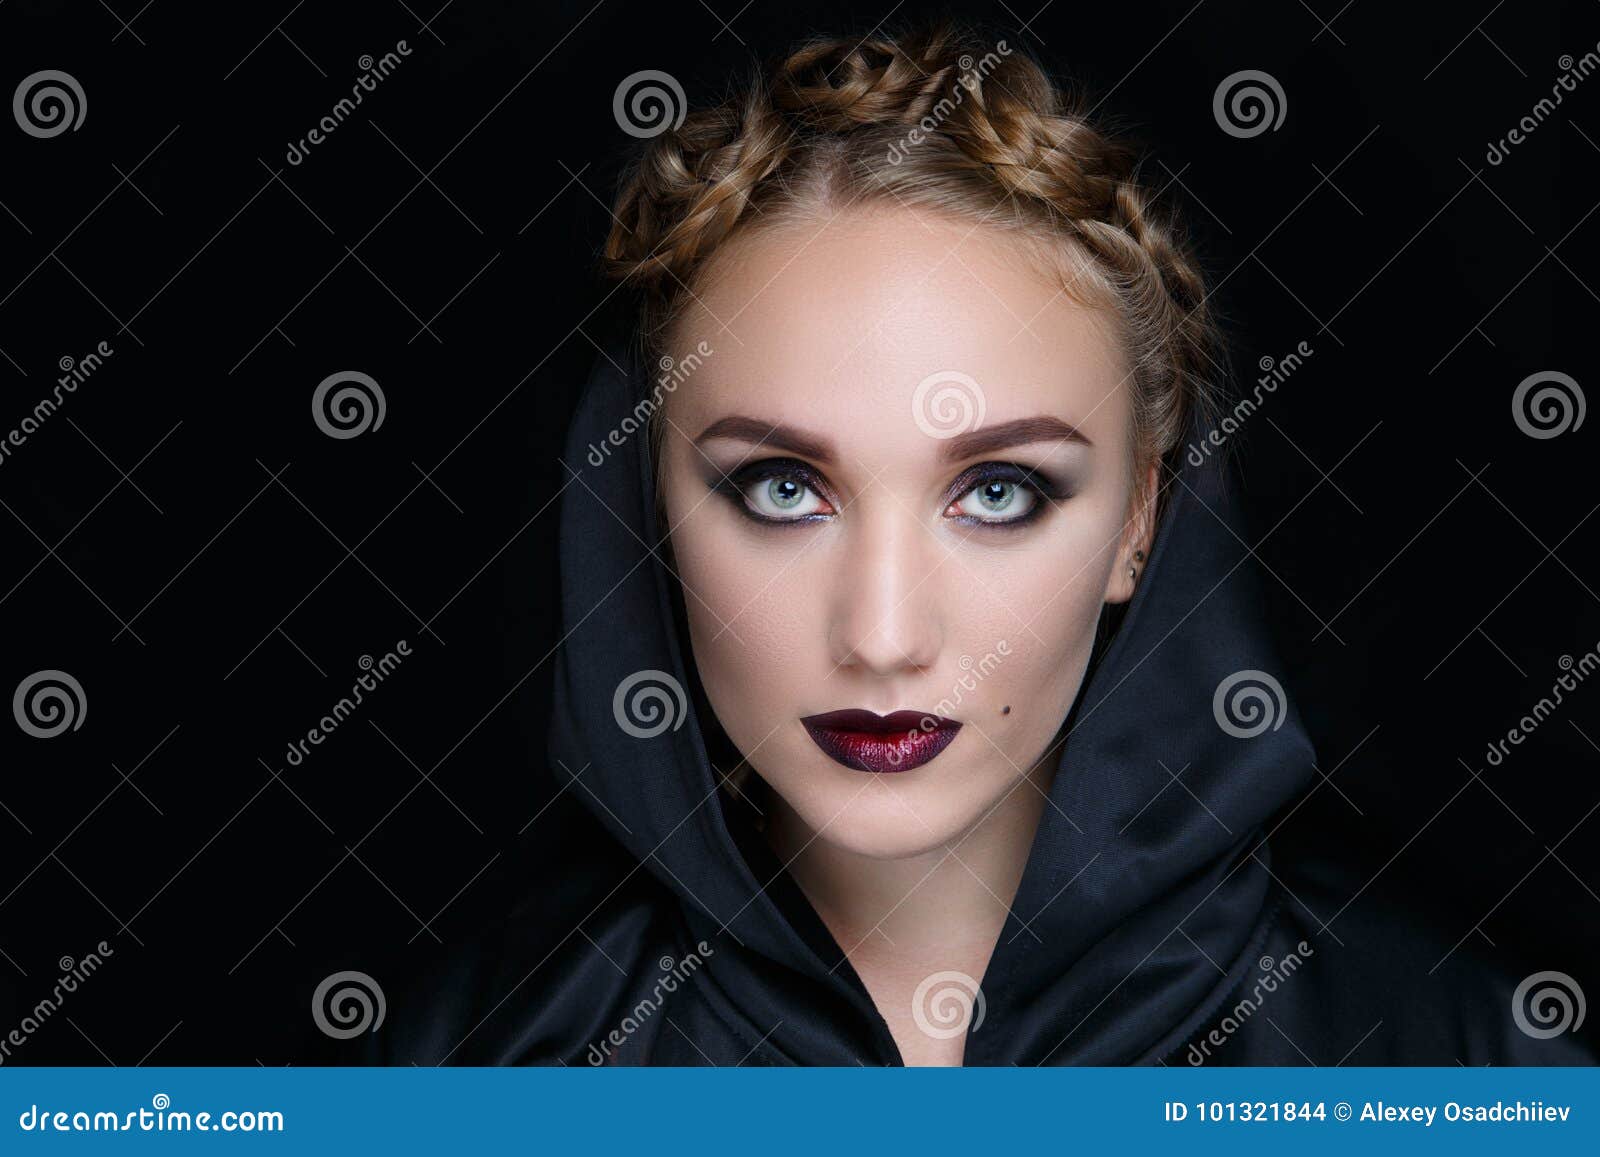 Woman dark make up stock photo. Image of horror, girl - 101321844